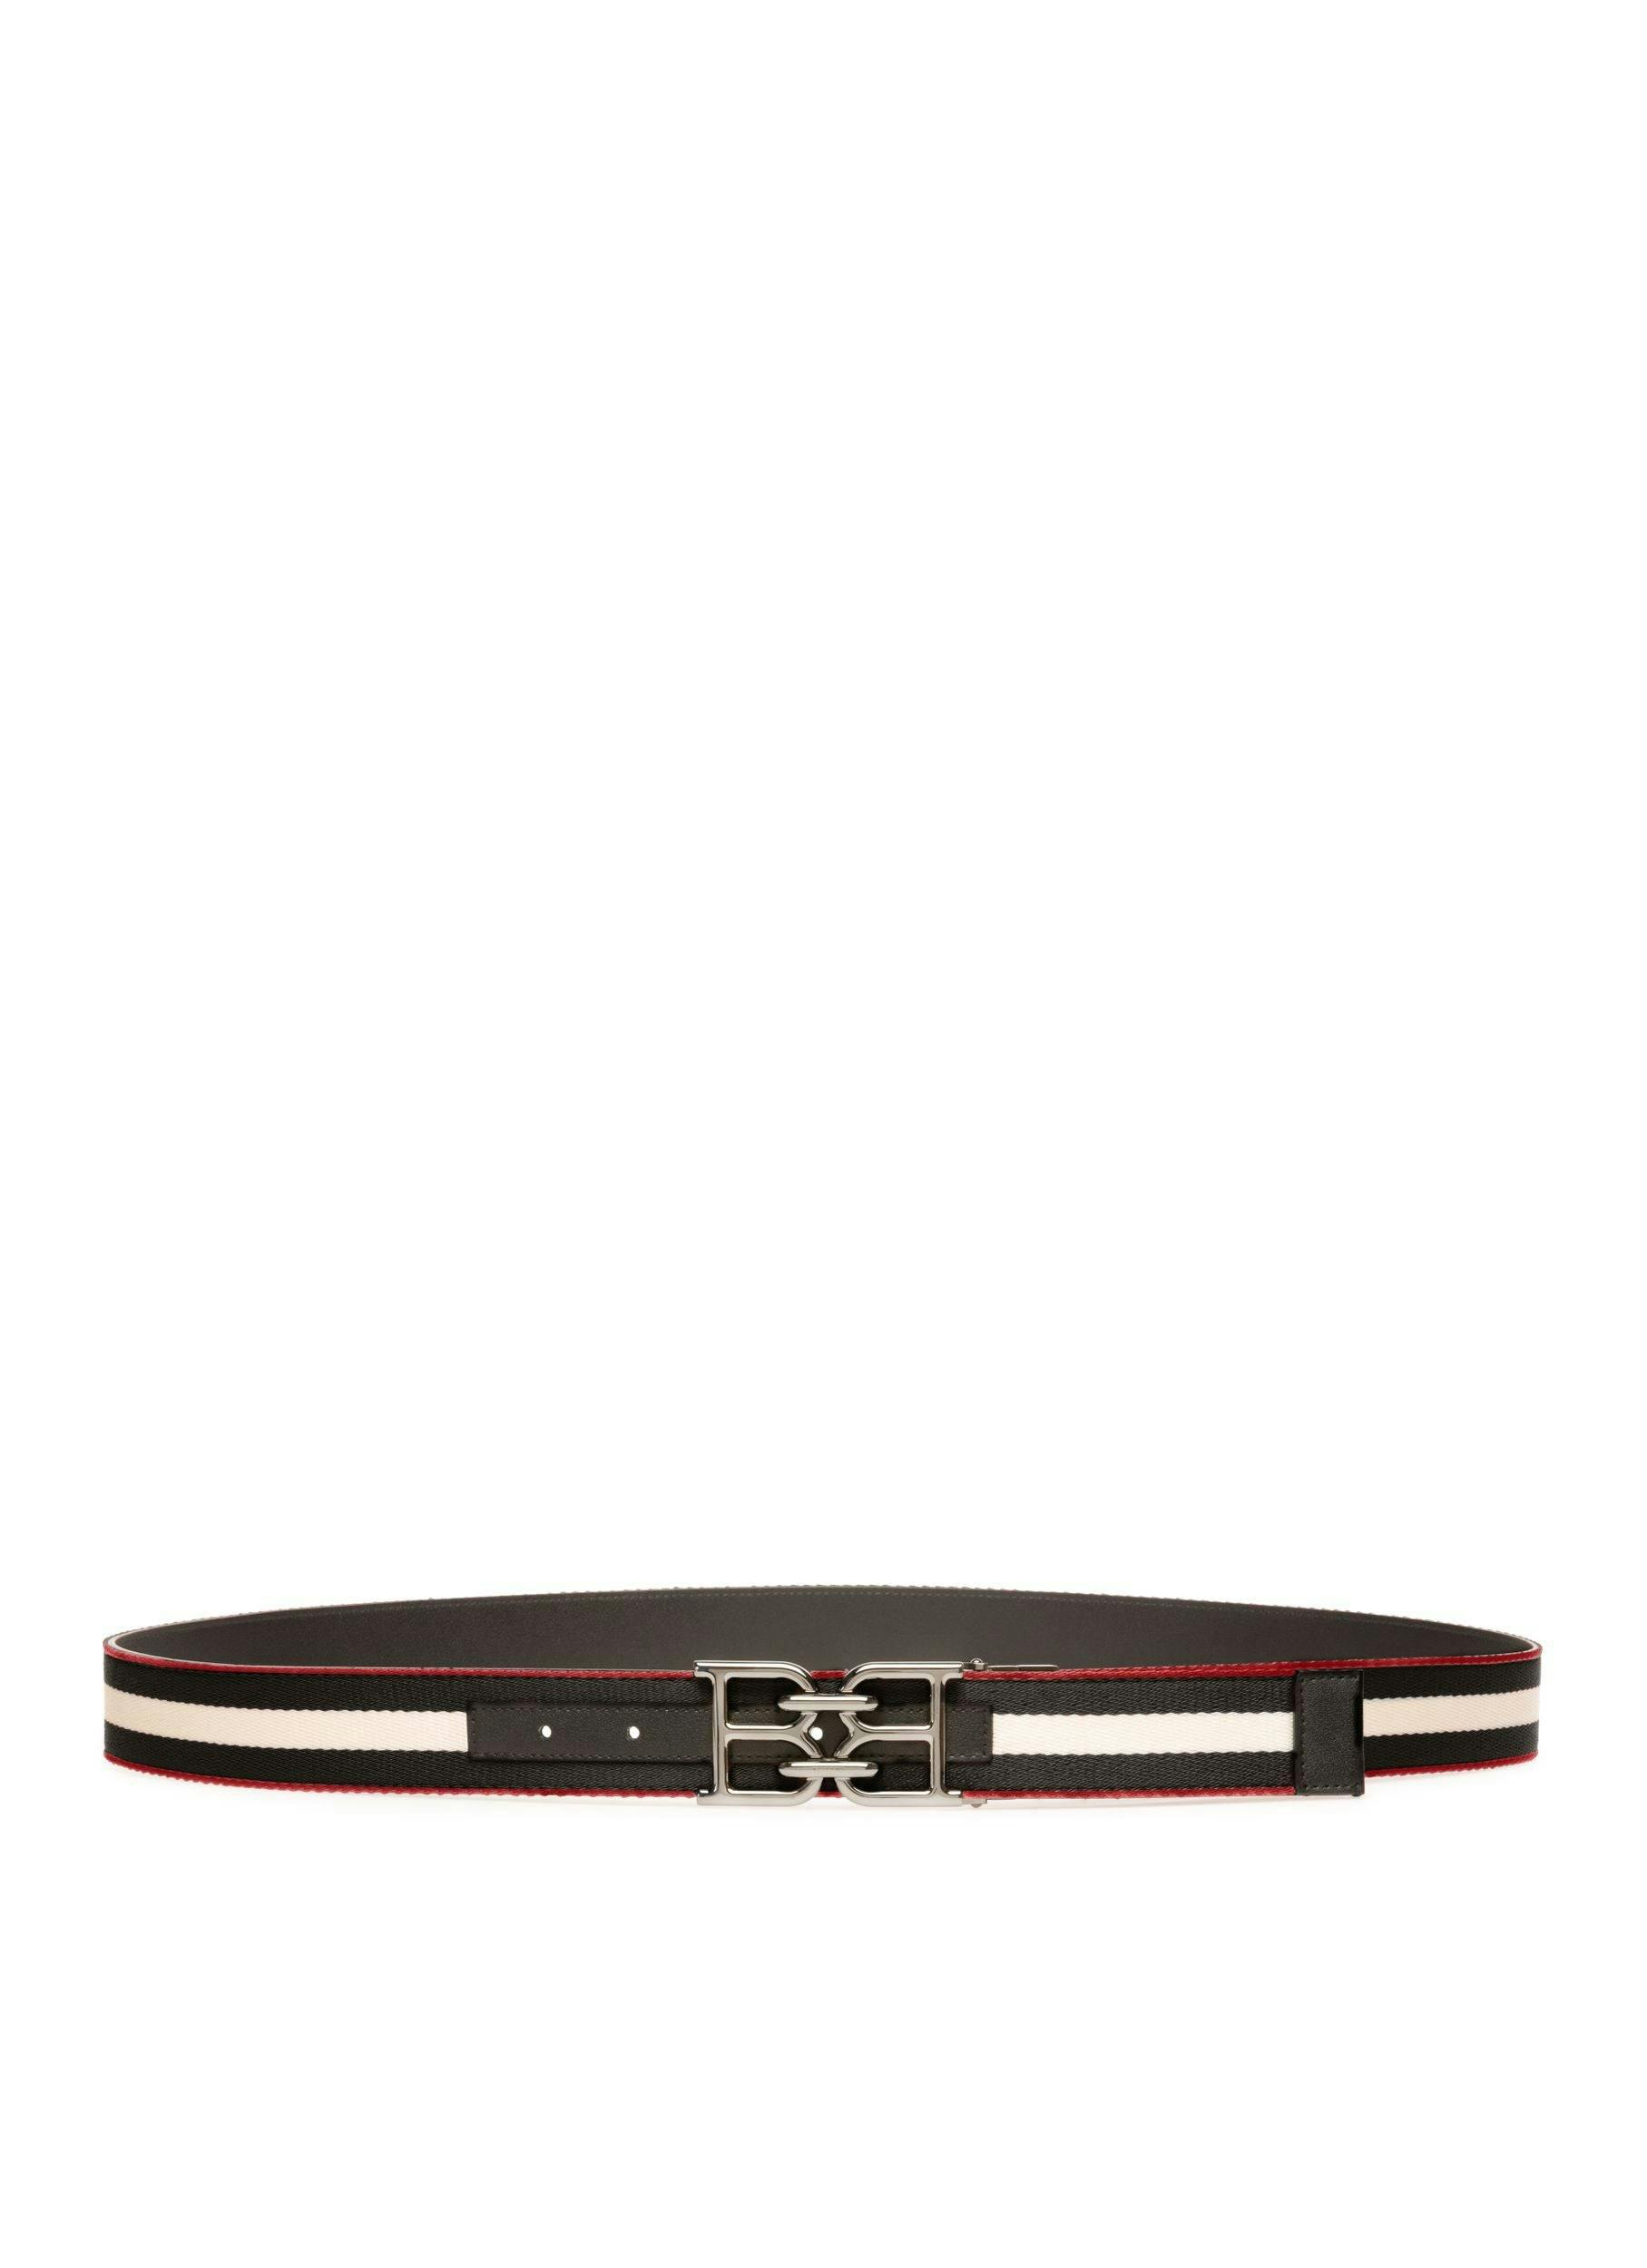 B-Chain Leather 35mm Belt In Black - Men's - Bally - 01